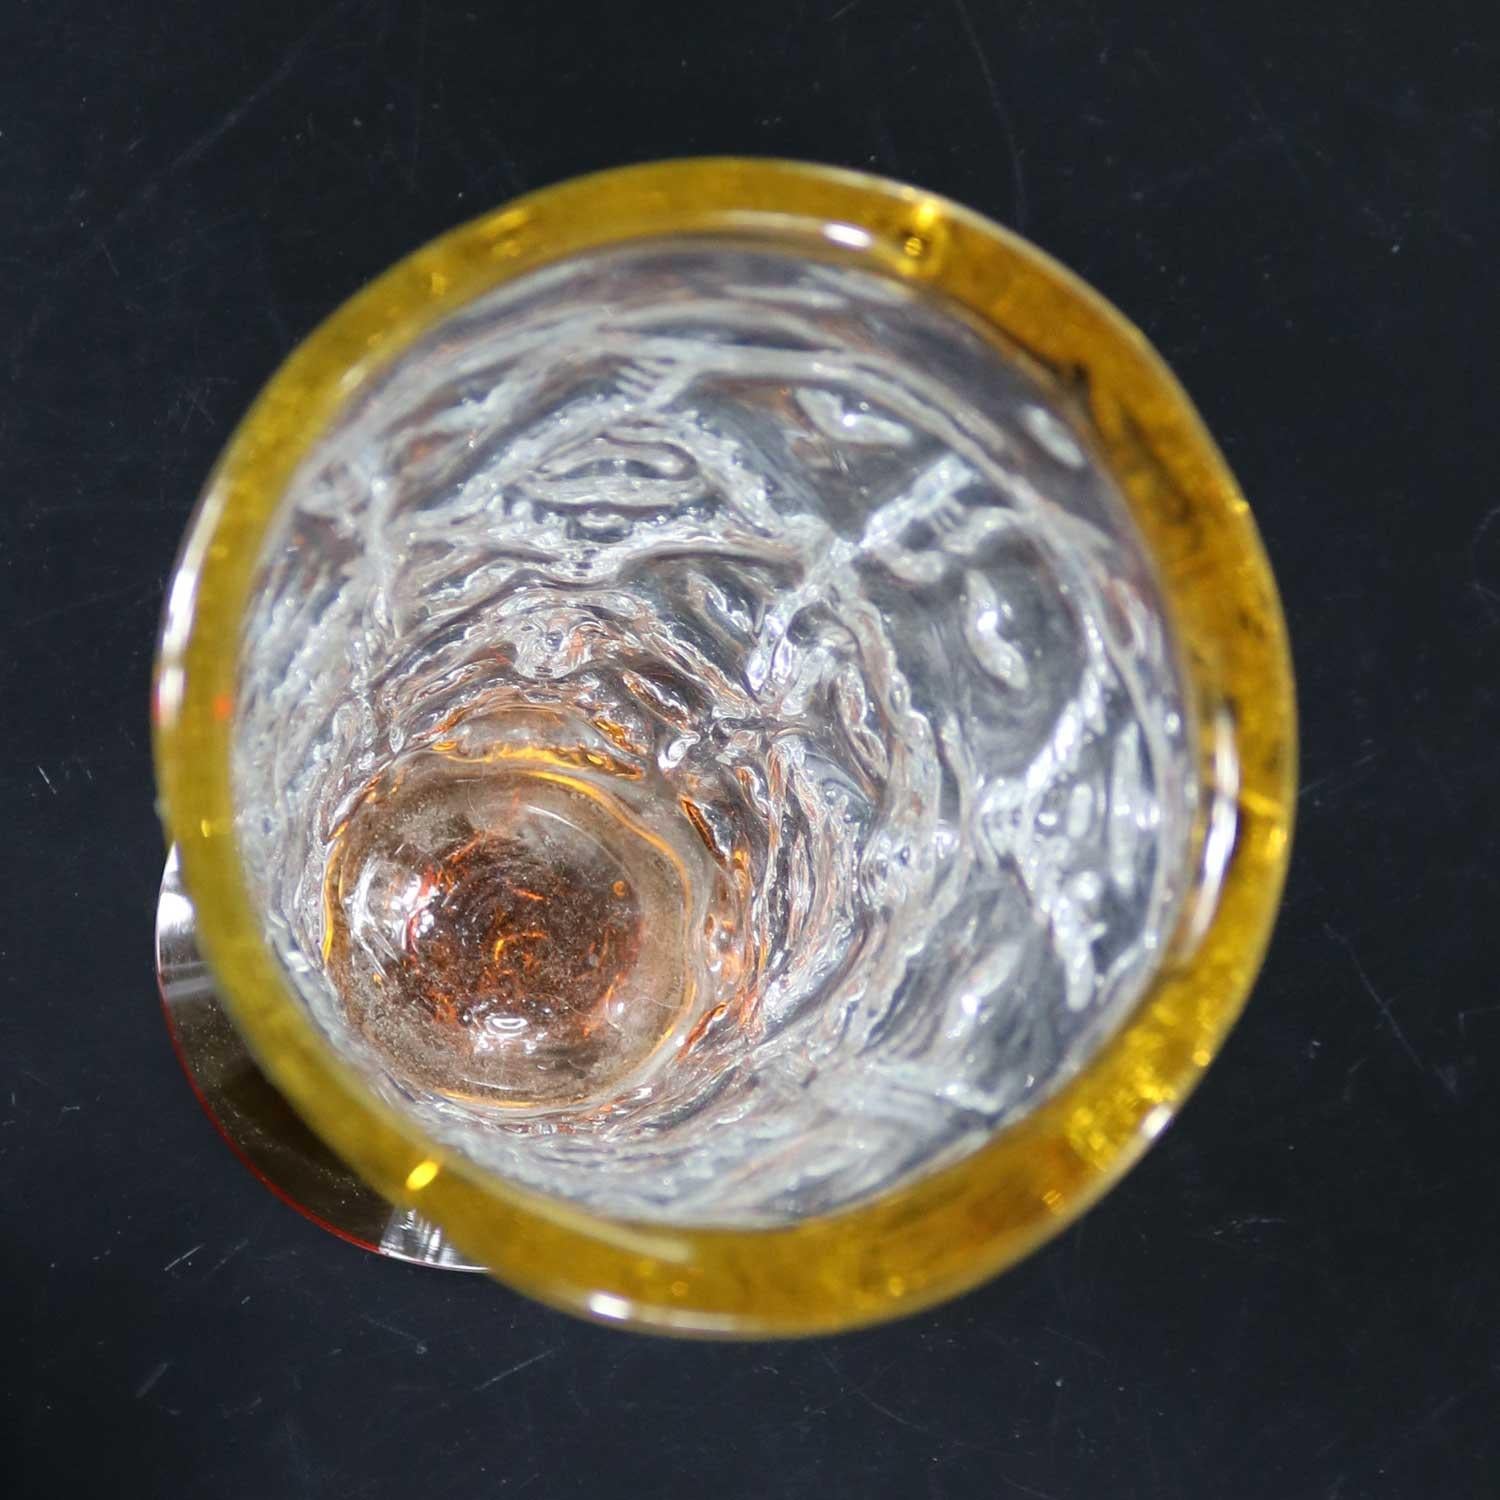 Blenko Hand Blown Glass Vase #9426 in Crystal and Topaz by Hank Adams 6